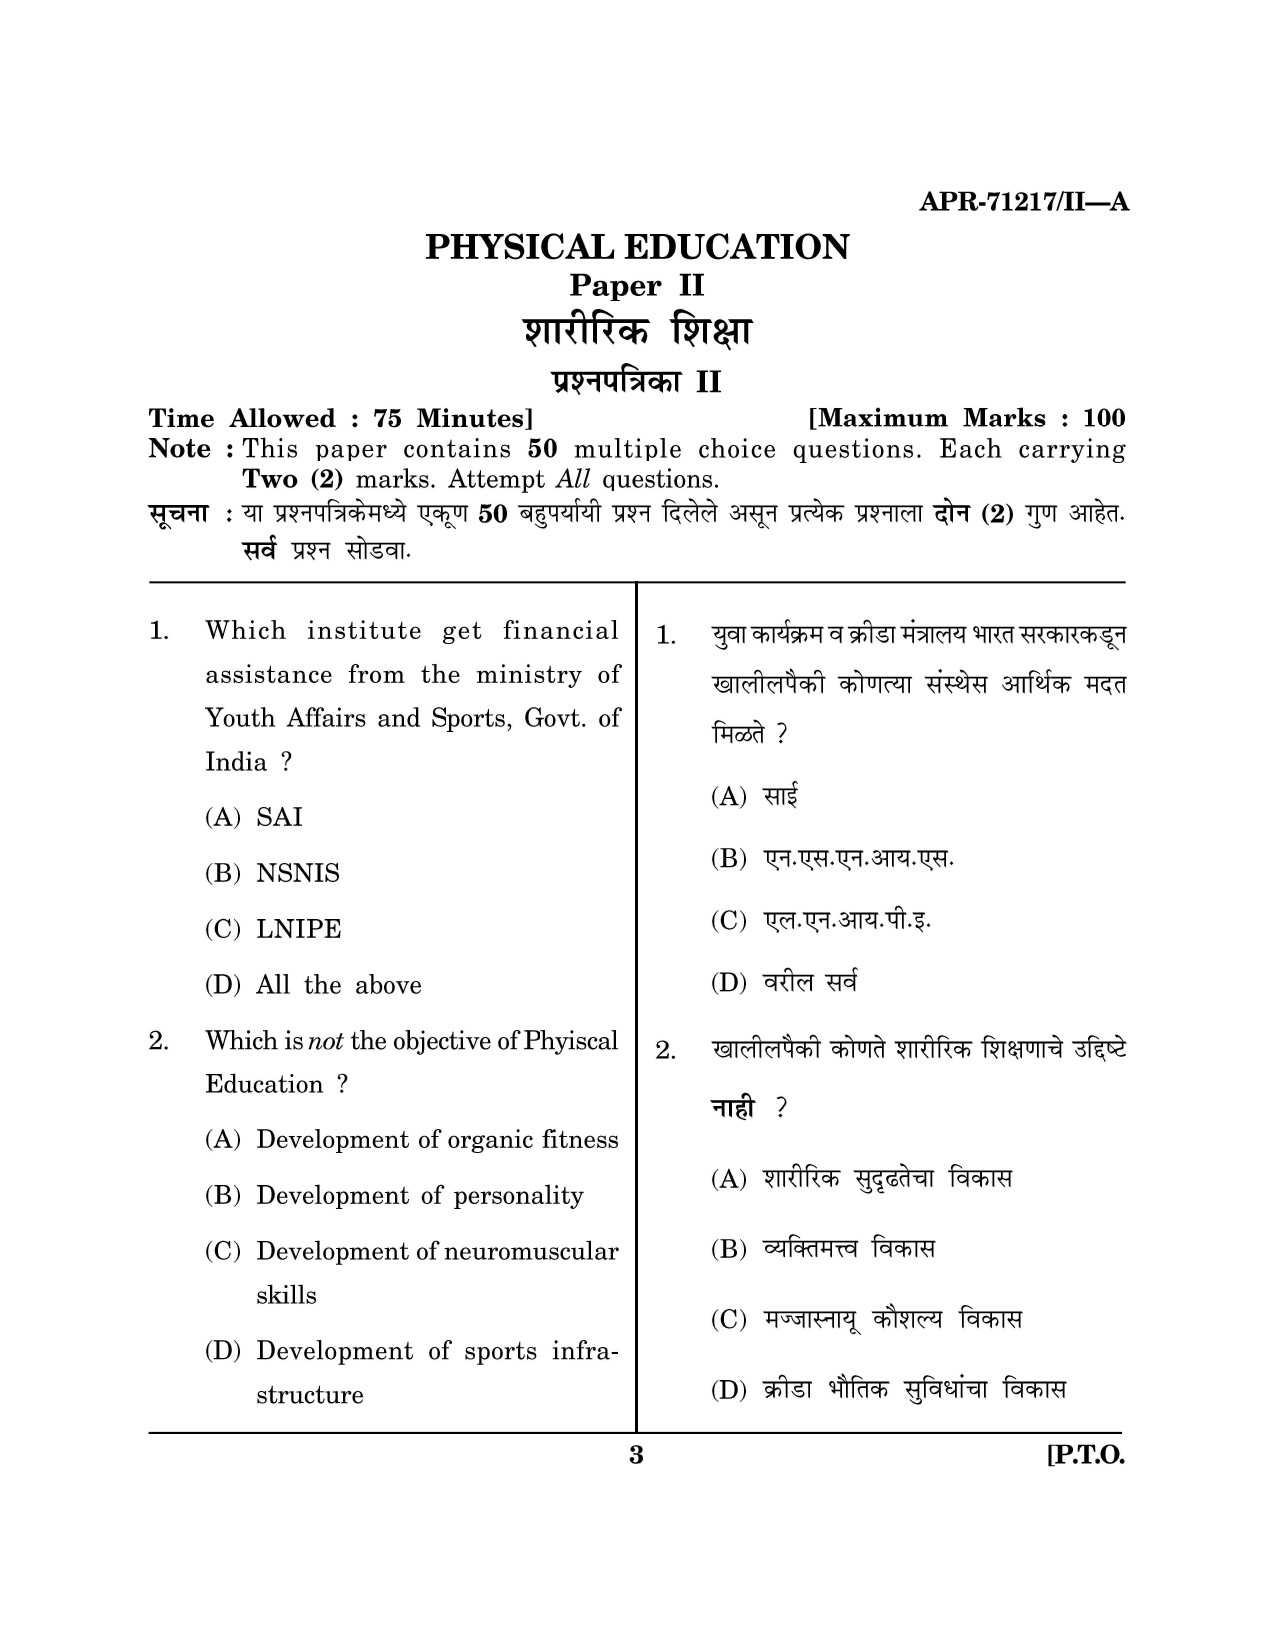 Maharashtra SET Physical Education Question Paper II April 2017 2